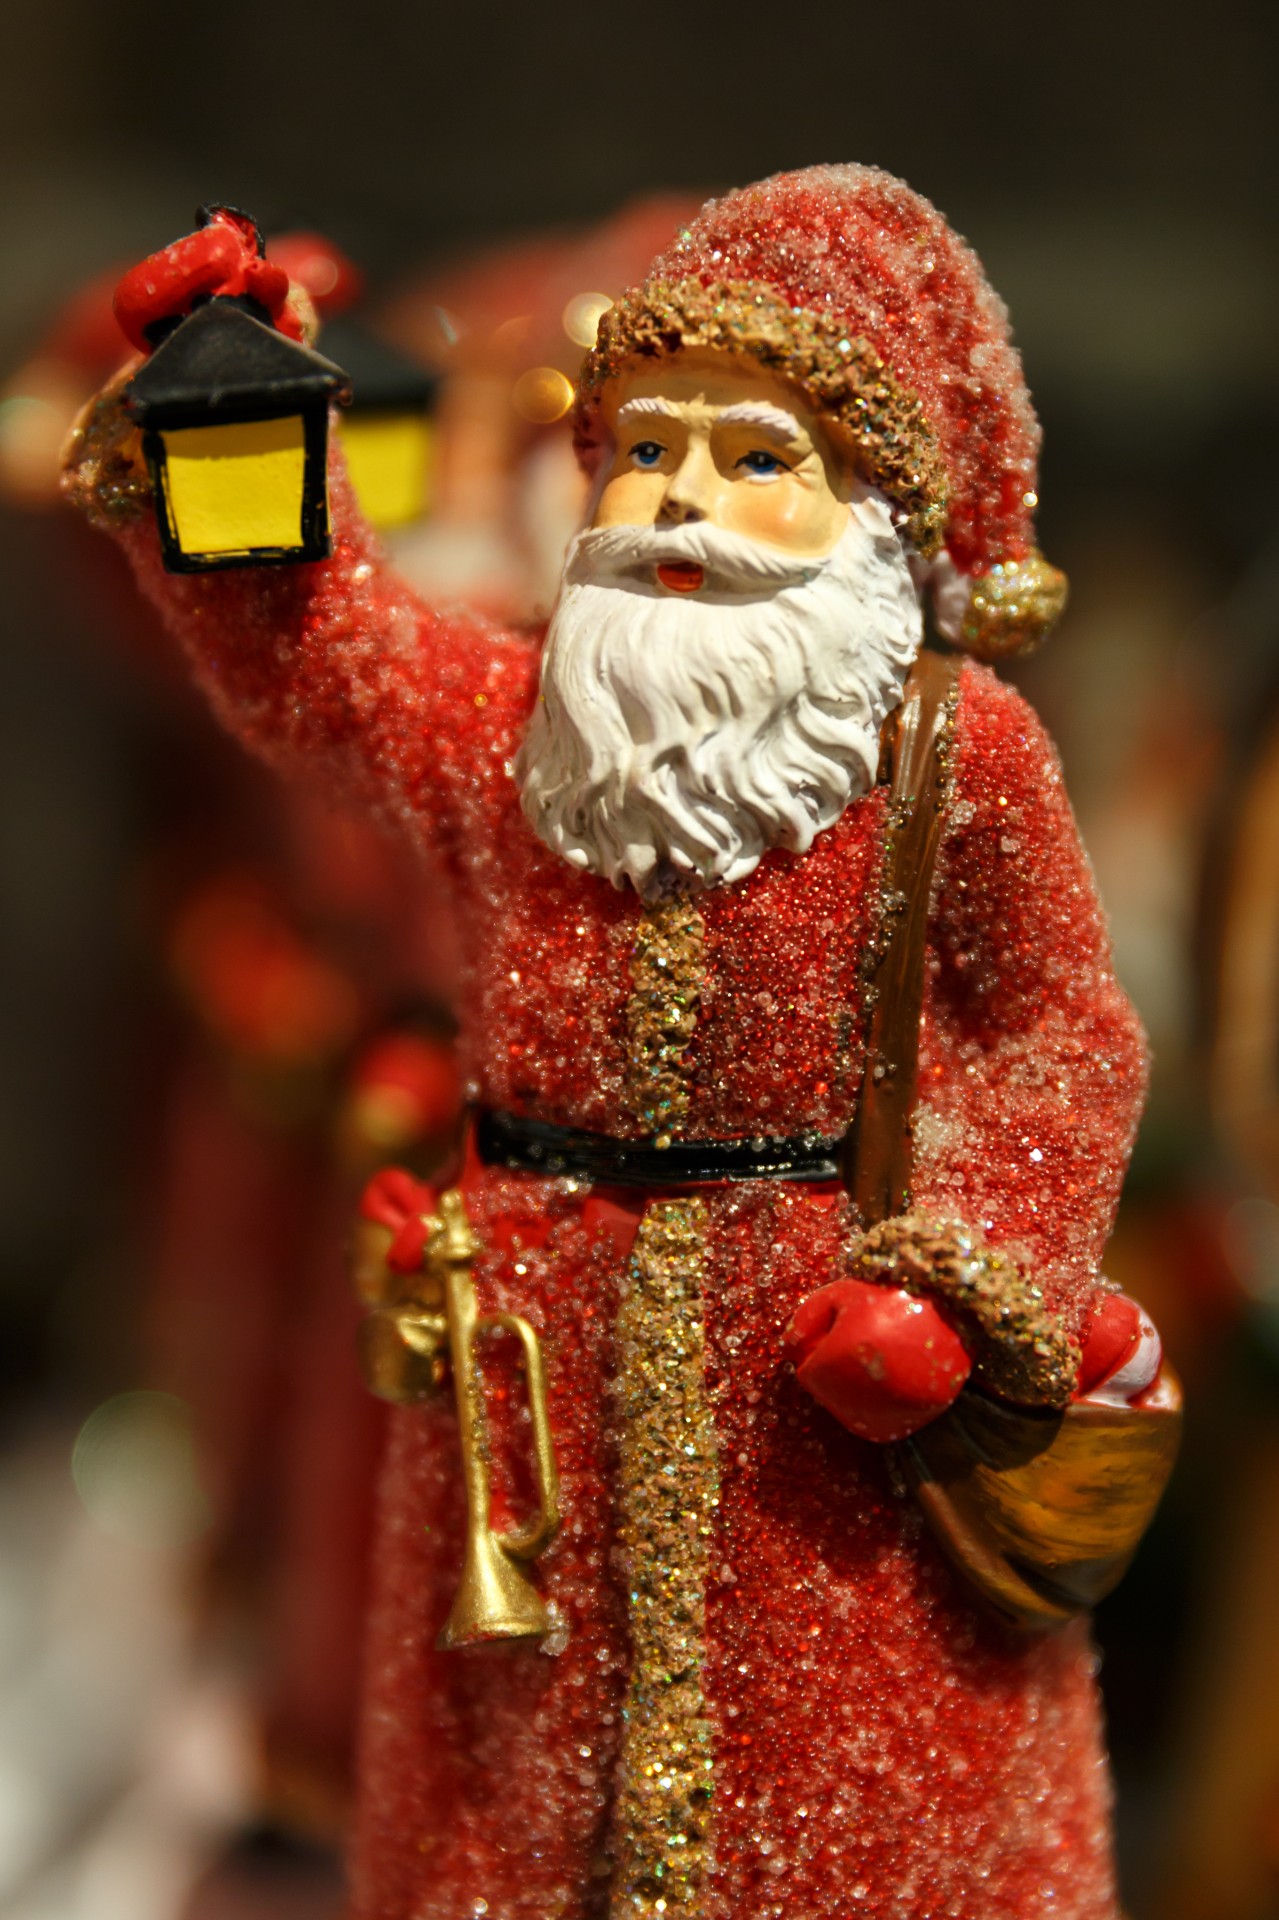 Santa Claus figure holding a lantern